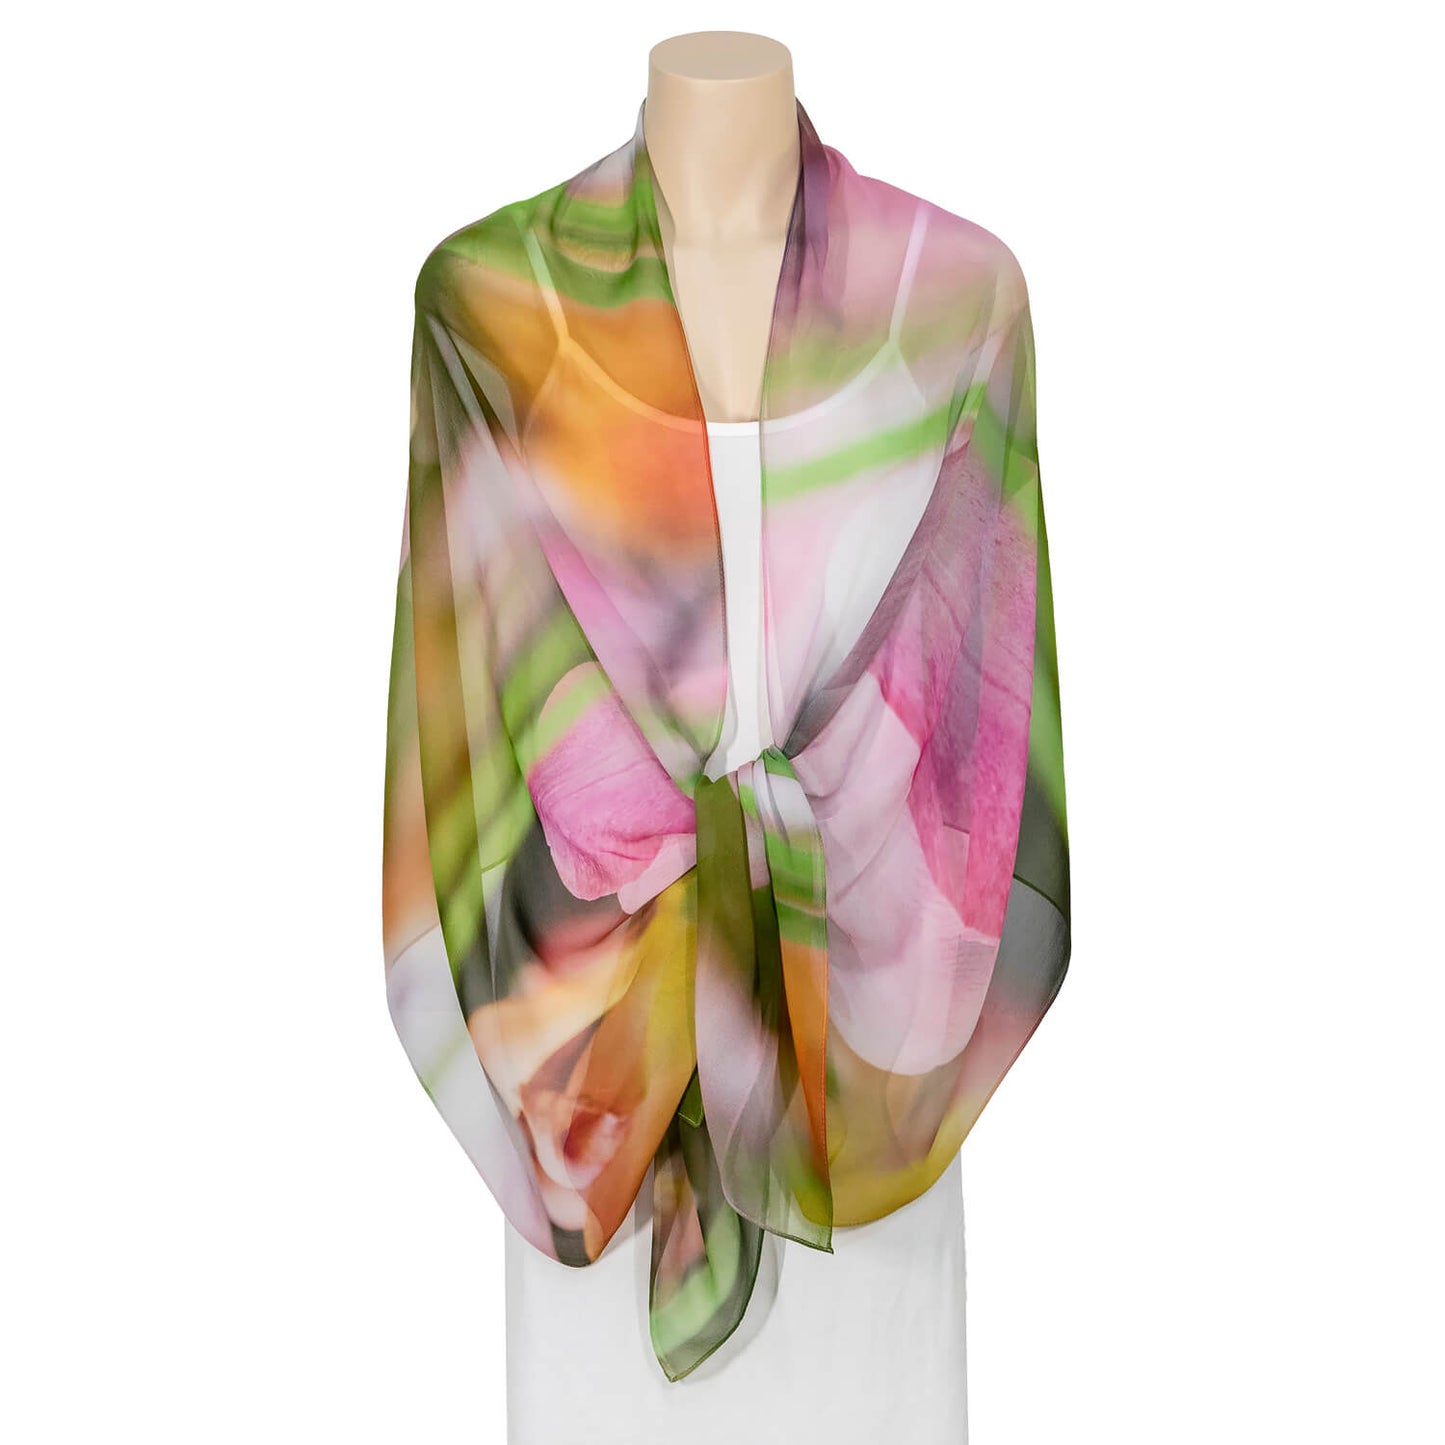 tulips silk scarf by seahorse silks worn as shawl over white dress